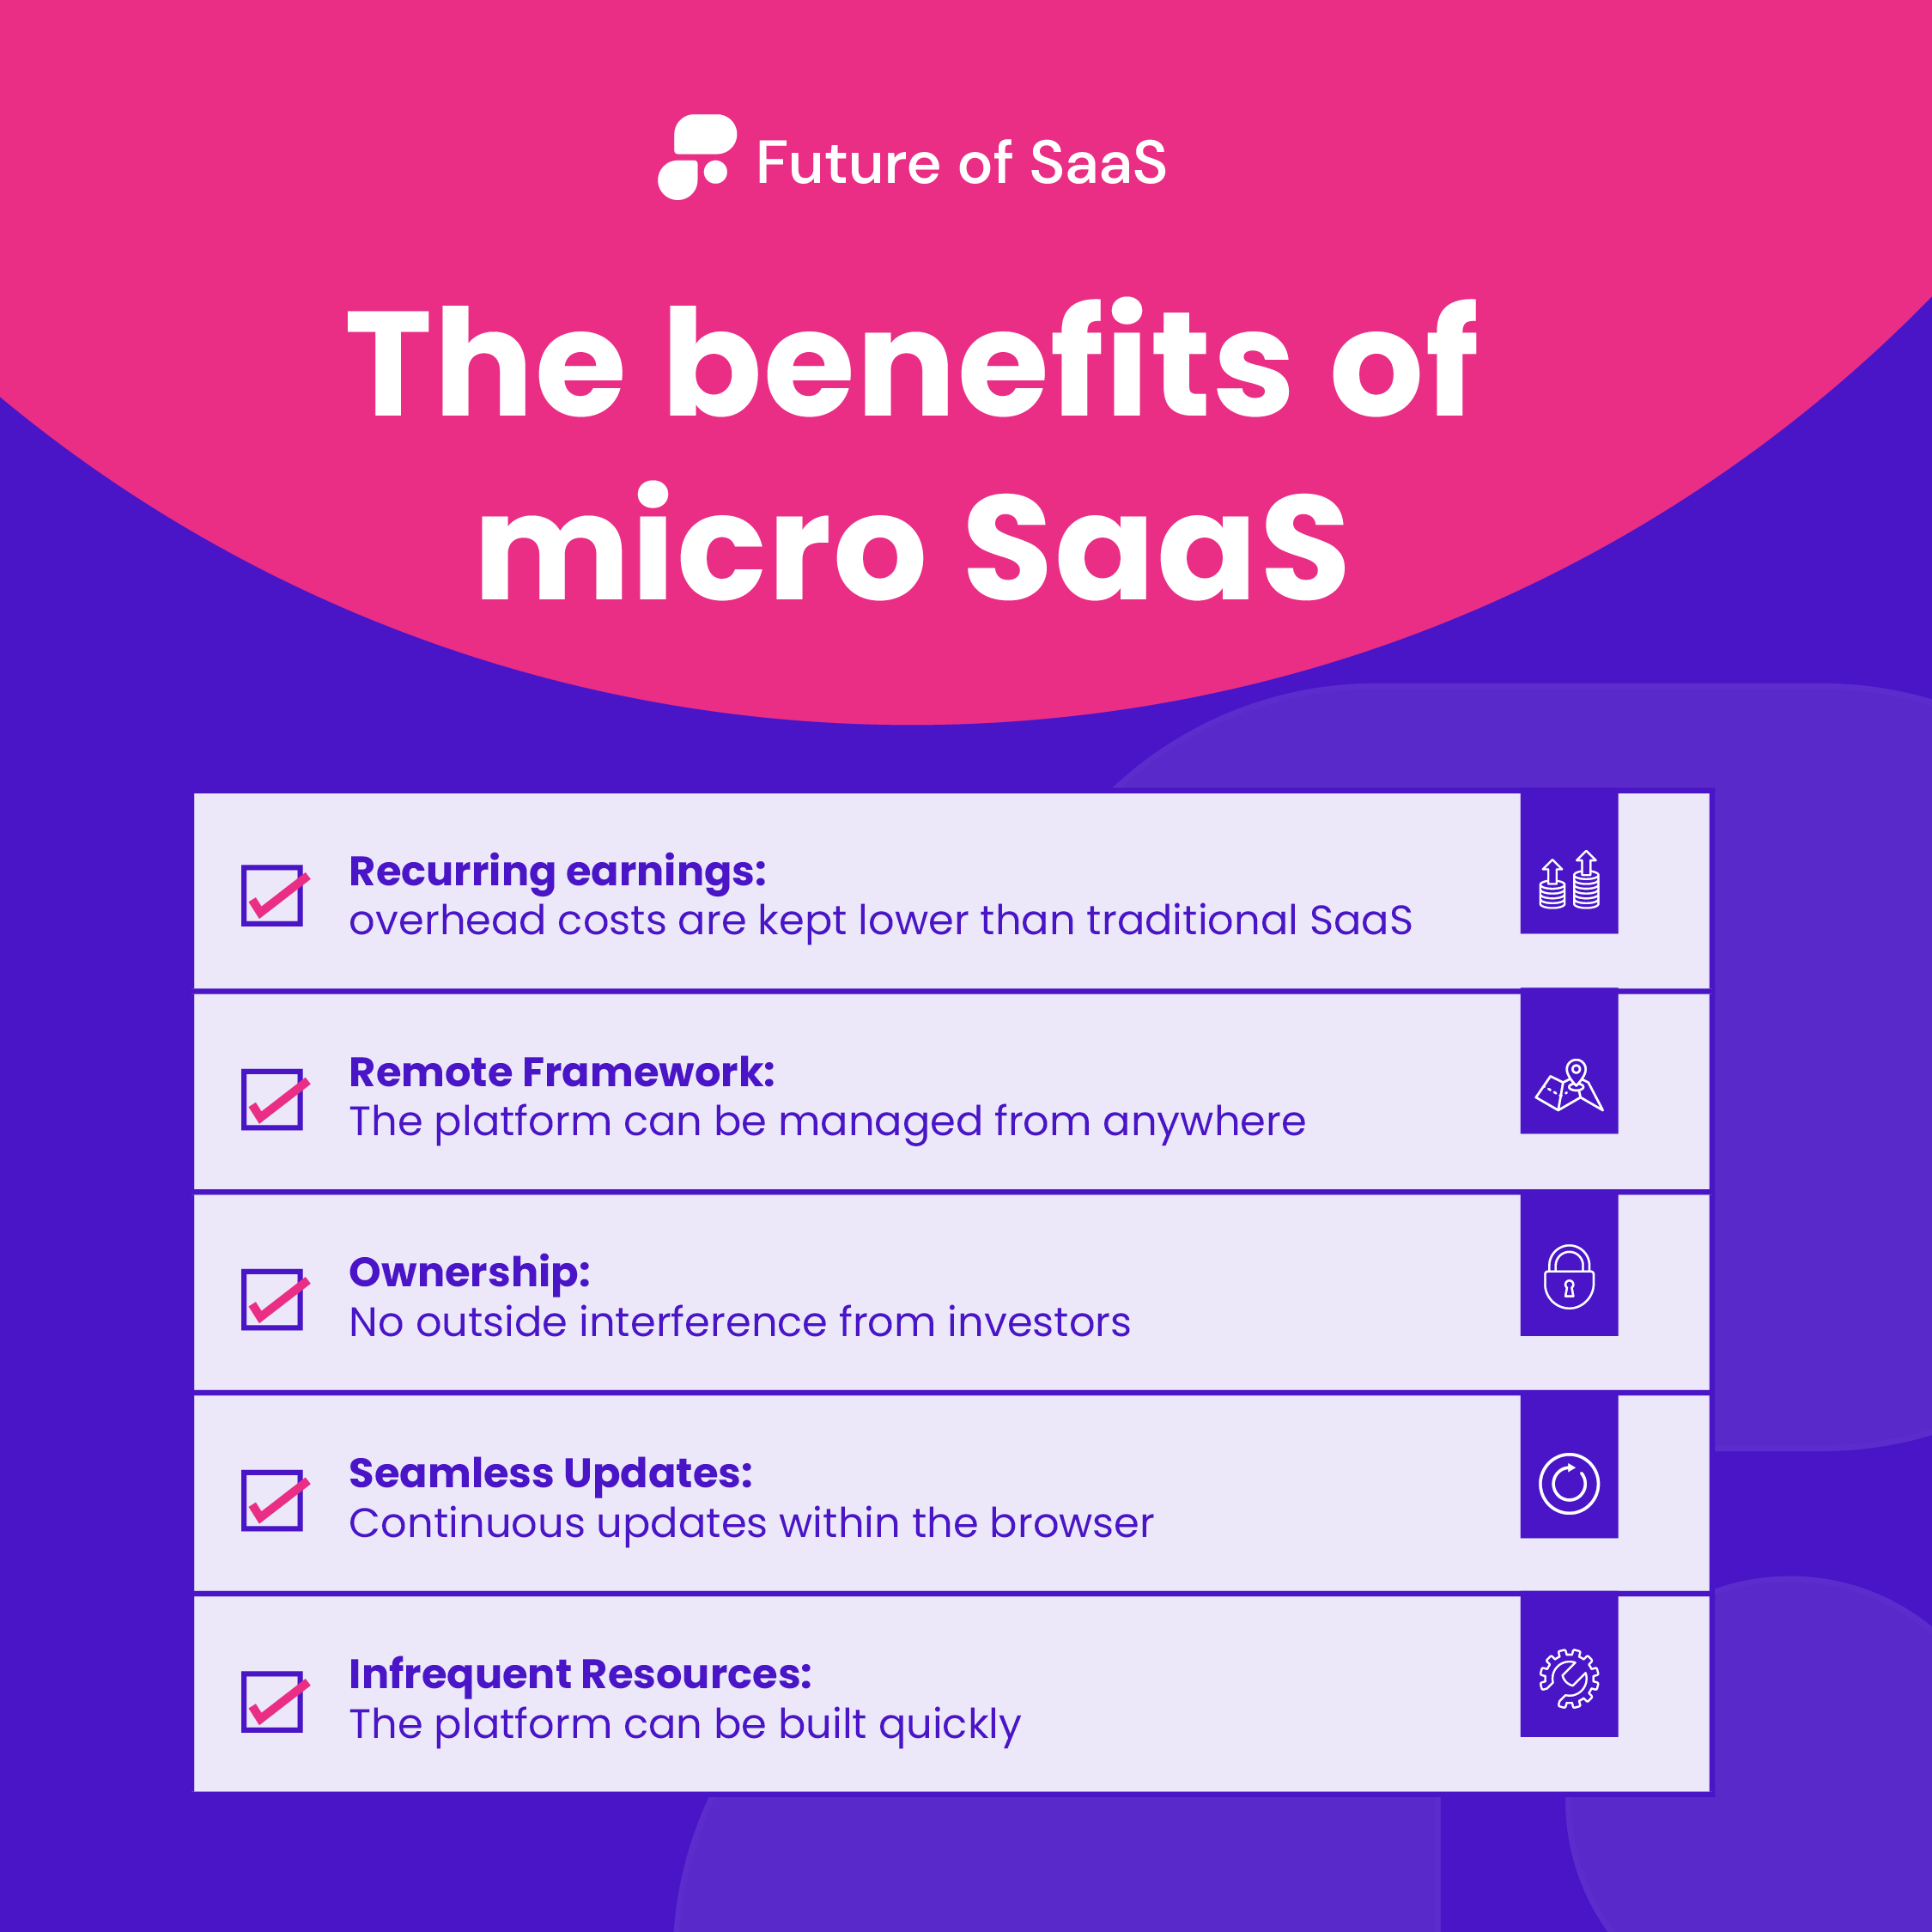 The benefits of micro SaaS